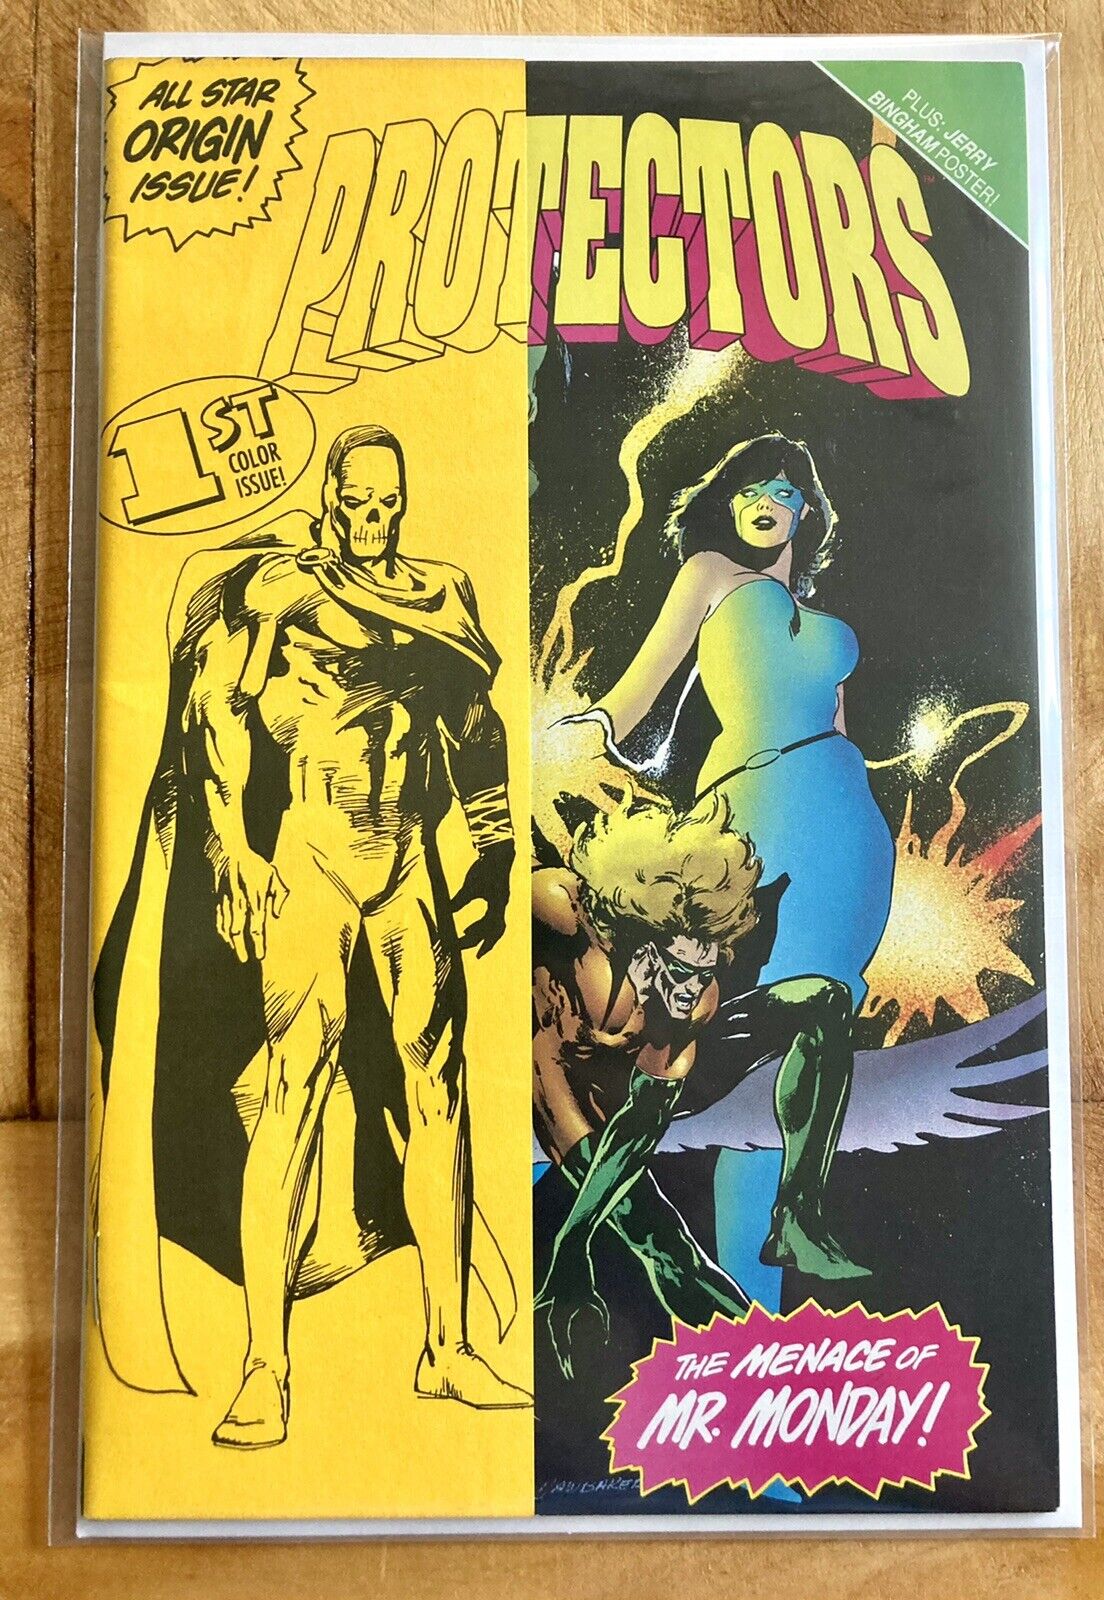 The Protectors  (Malibu Comics ) #1CS - Yellow Cover All-Star Origin Issue EX